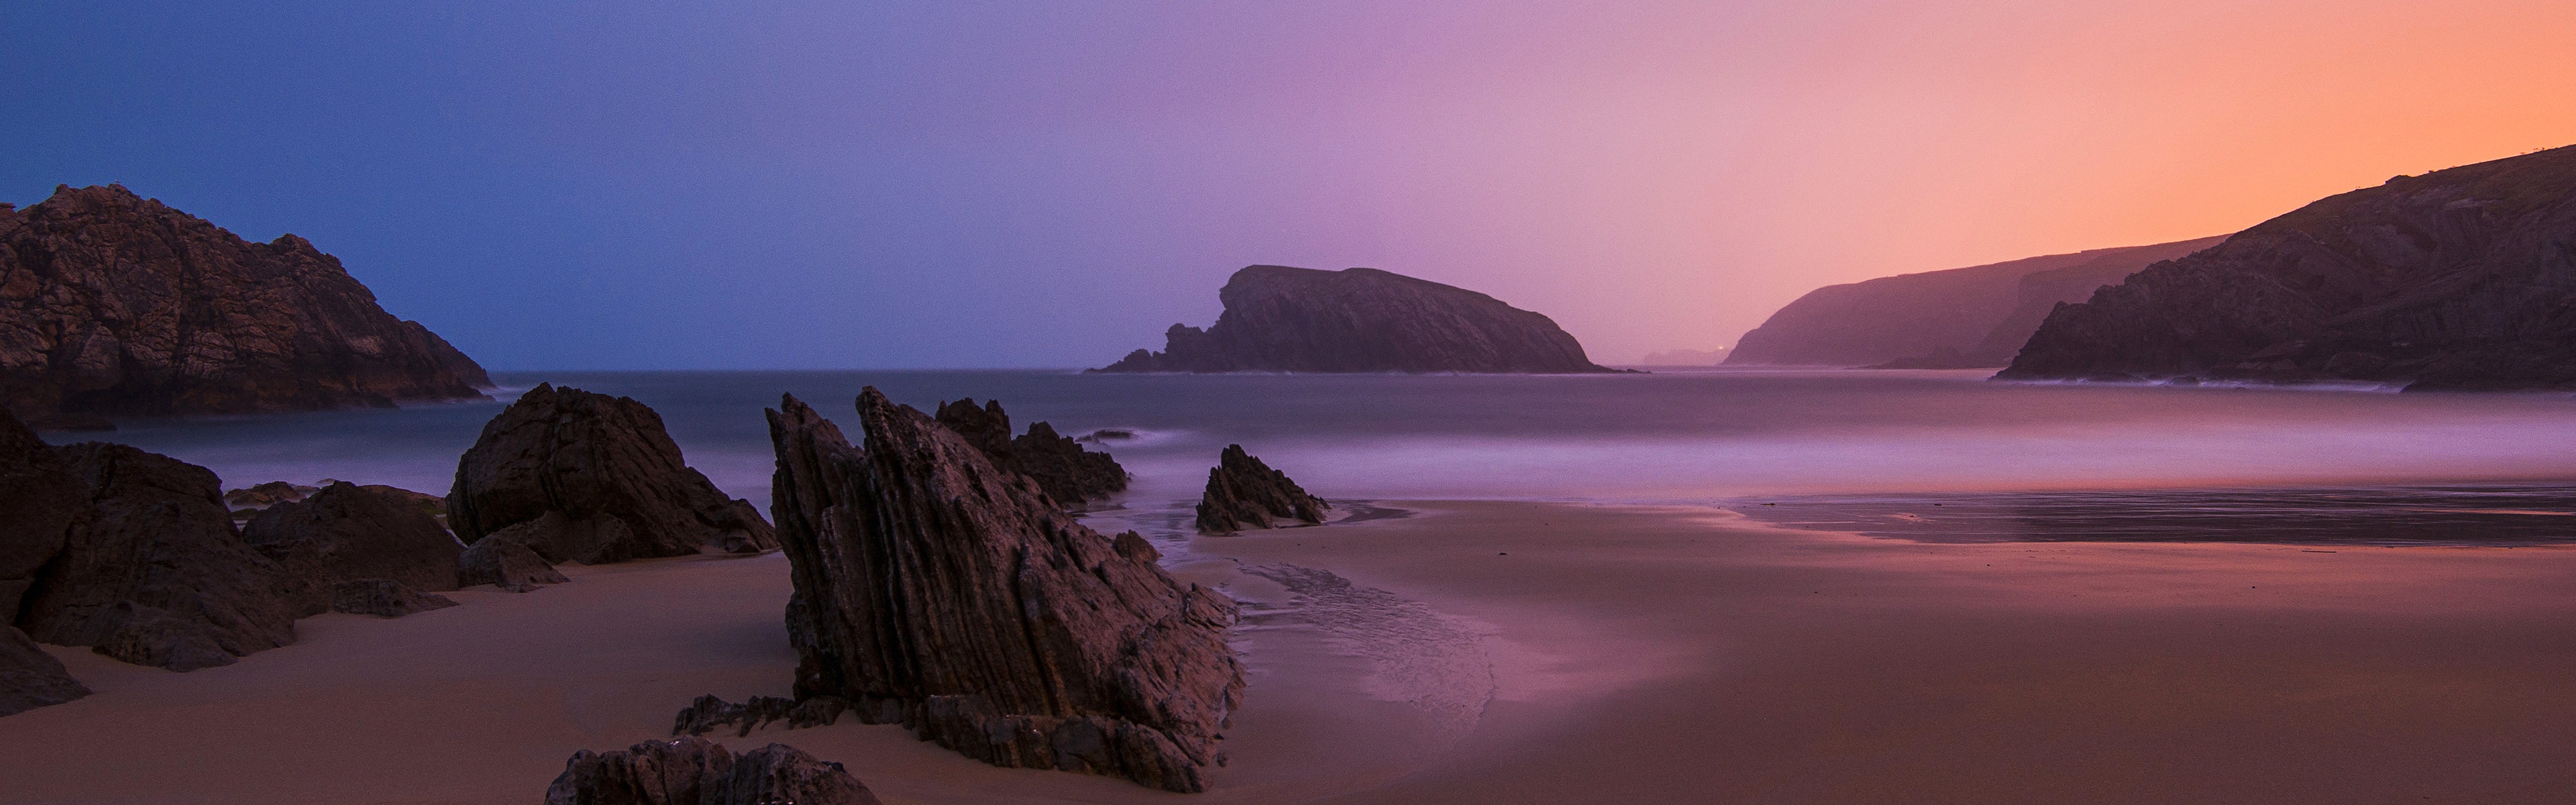 Beautiful beach sunset, Windows 8 panoramic widescreen wallpapers #5 - 3840x1200